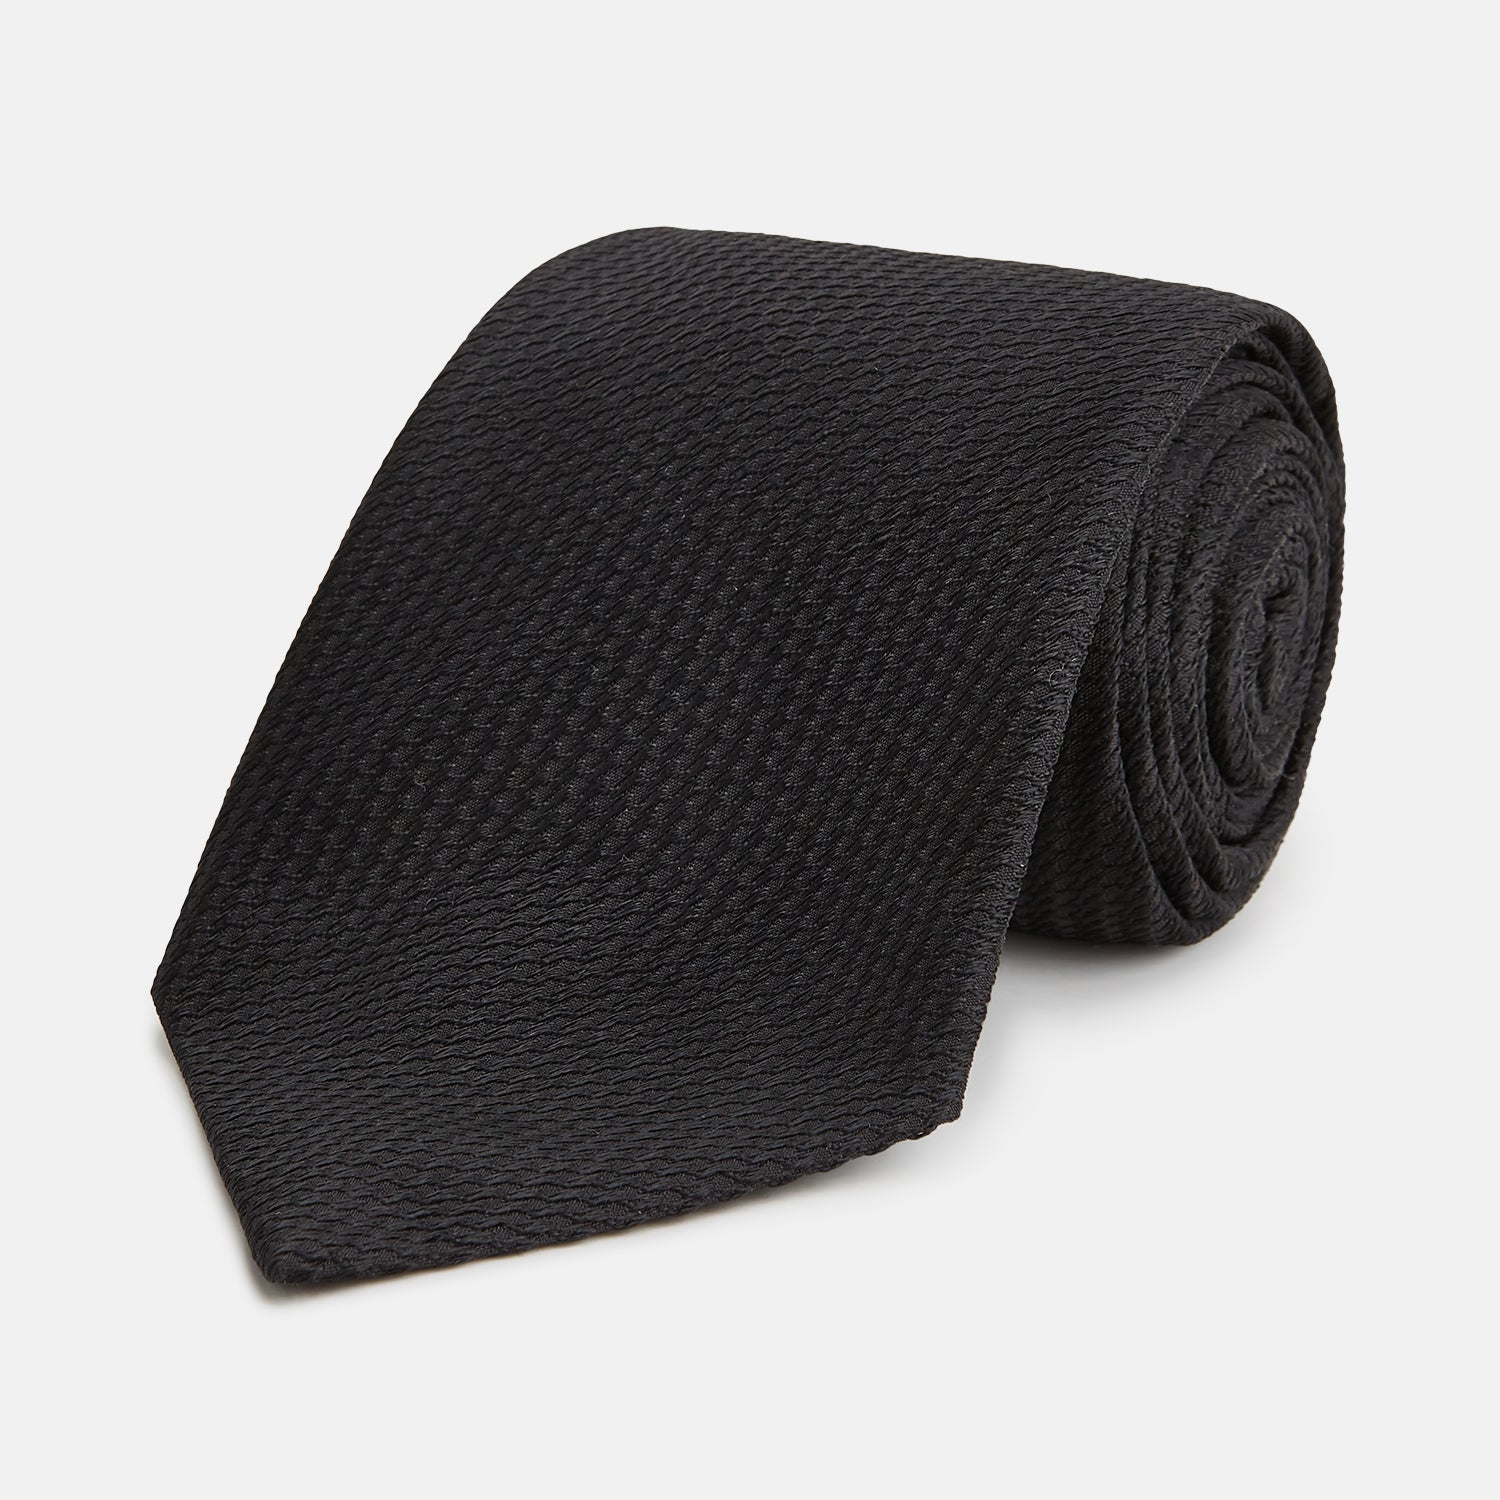 Black Lace Silk Tie